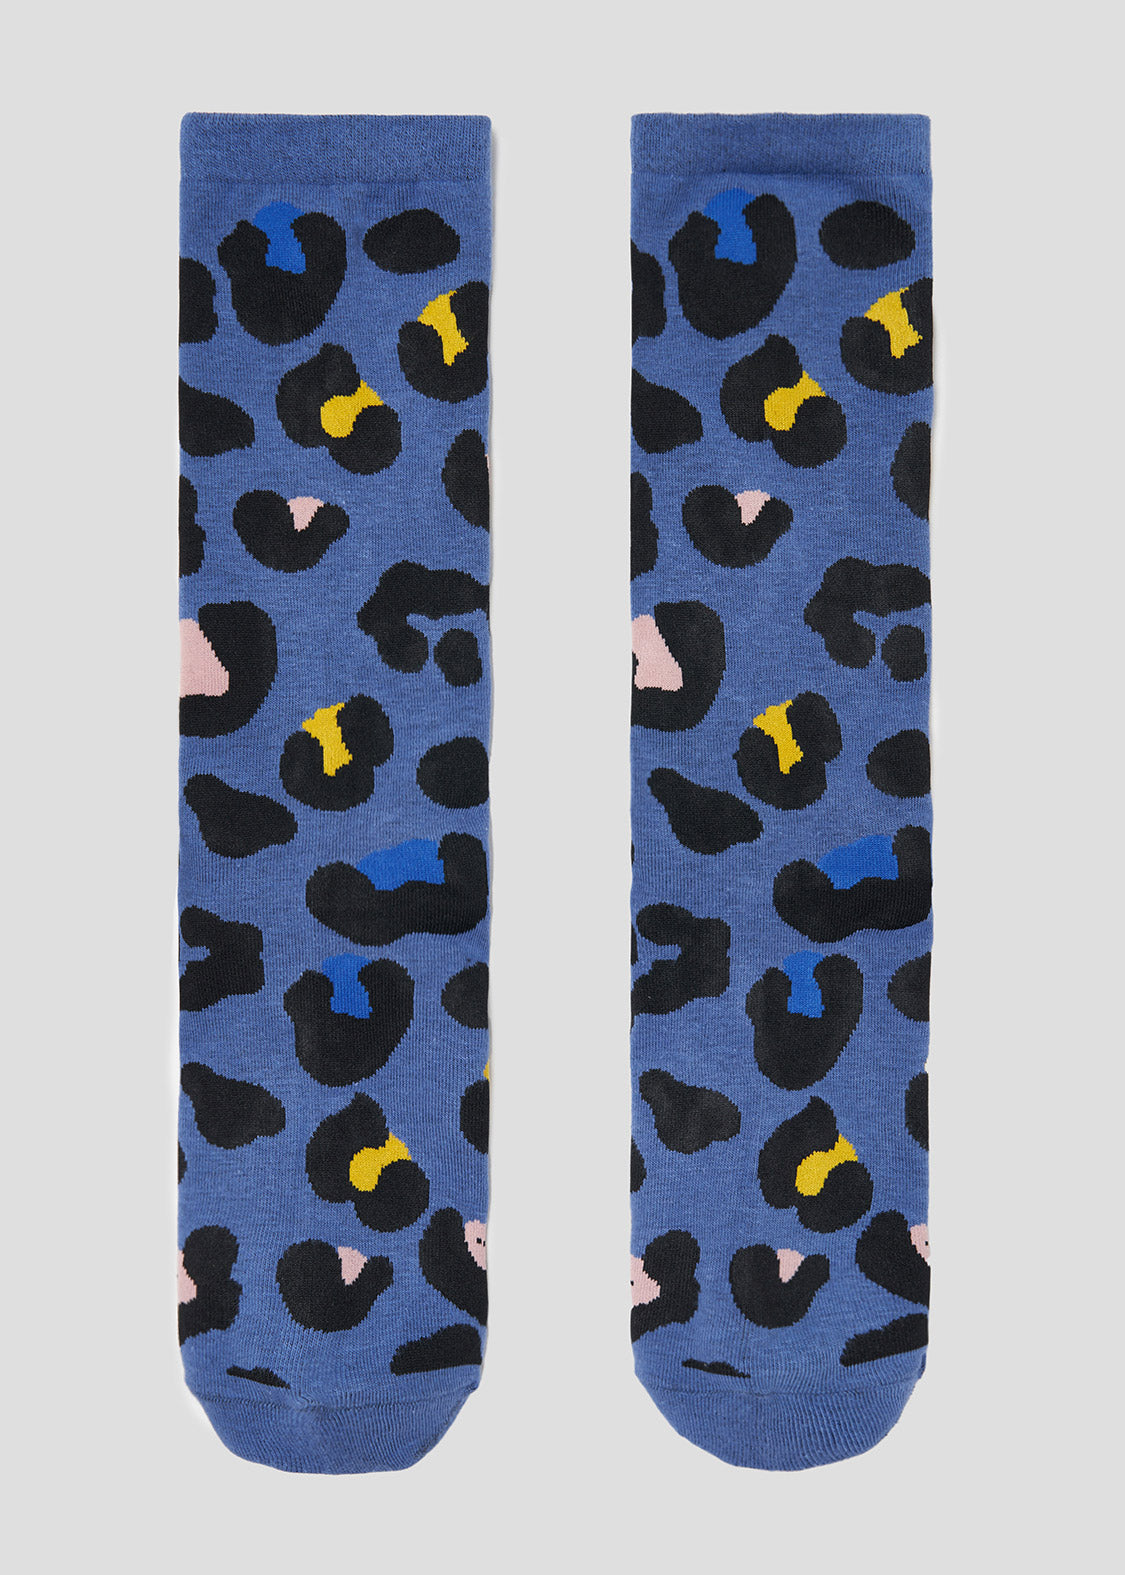 Long Socks (Leopard Print and Obachan)